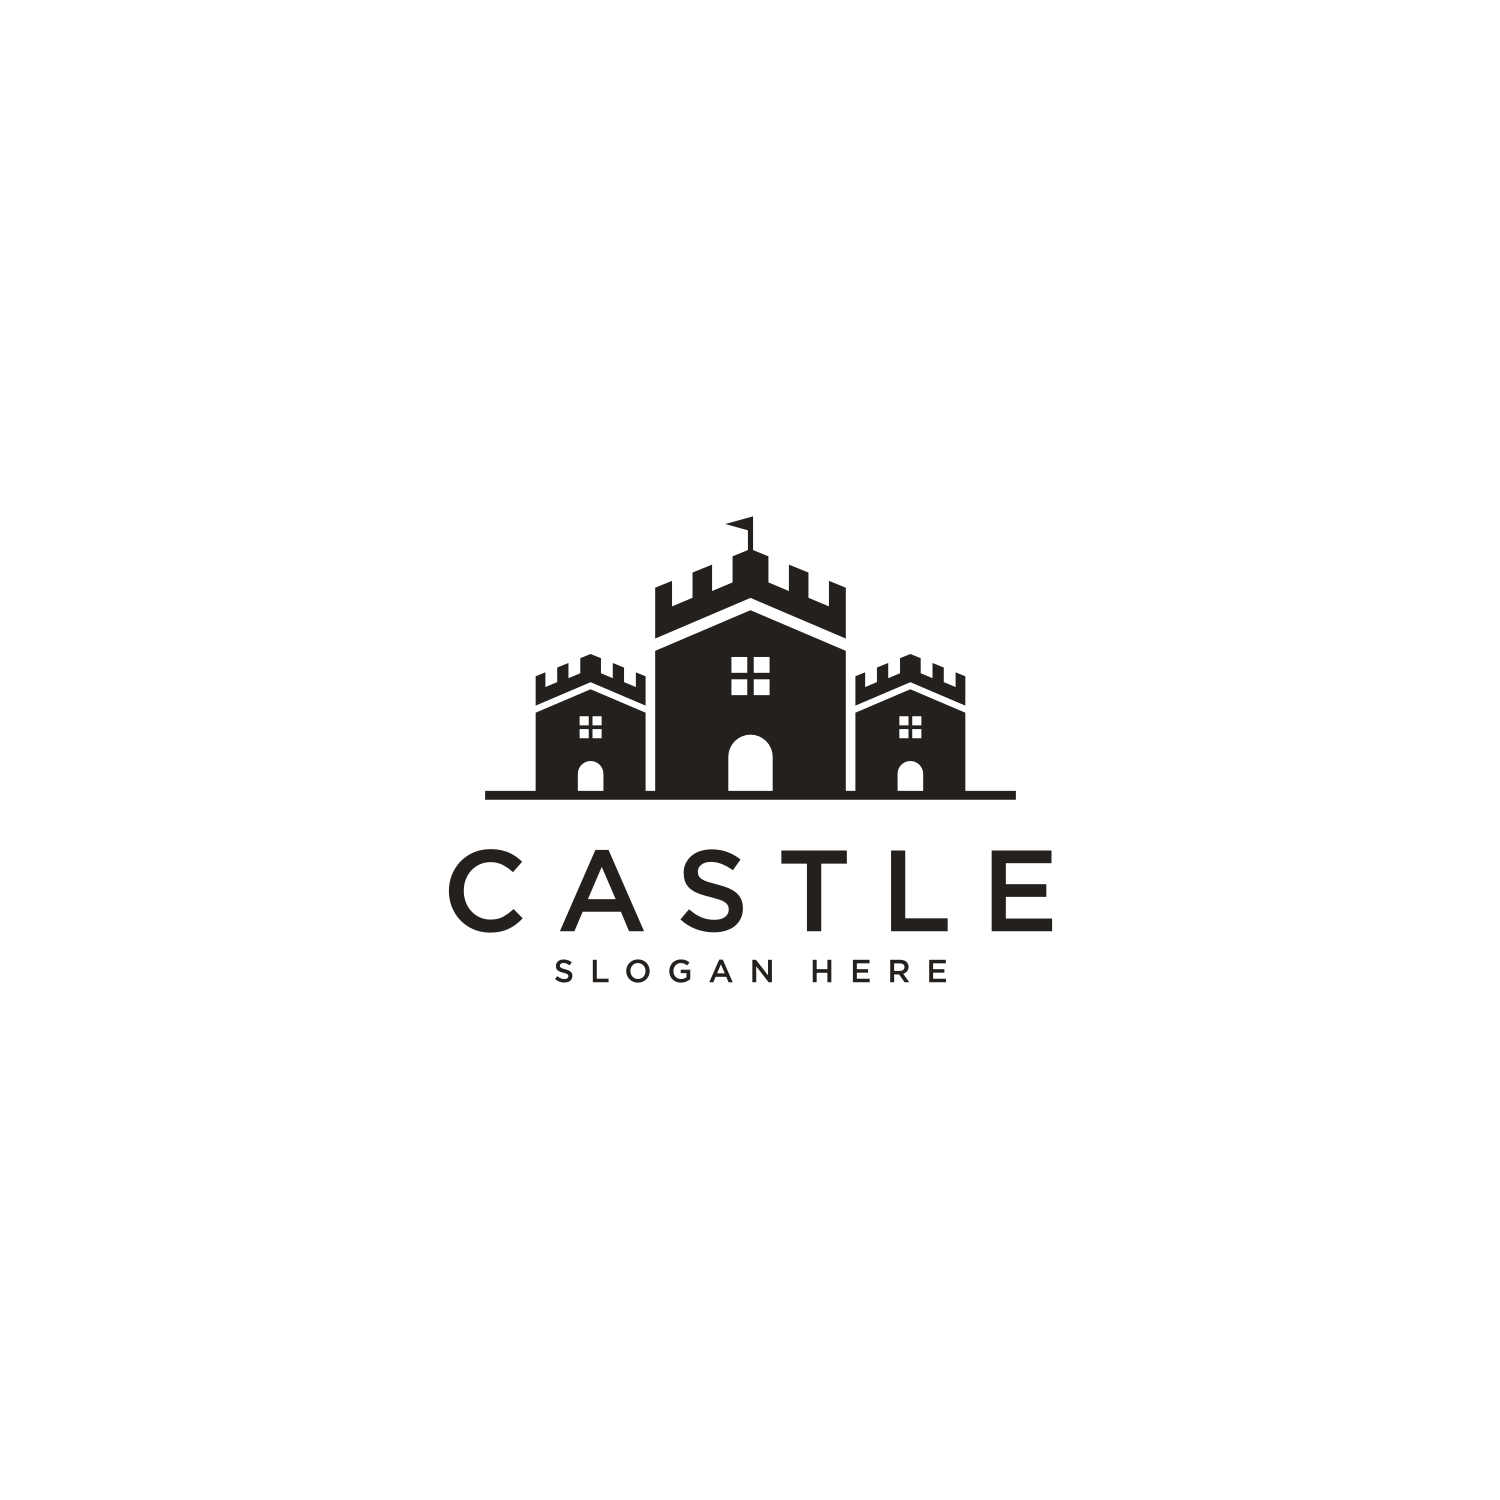 Castle Logo Vector Design Cover Image.